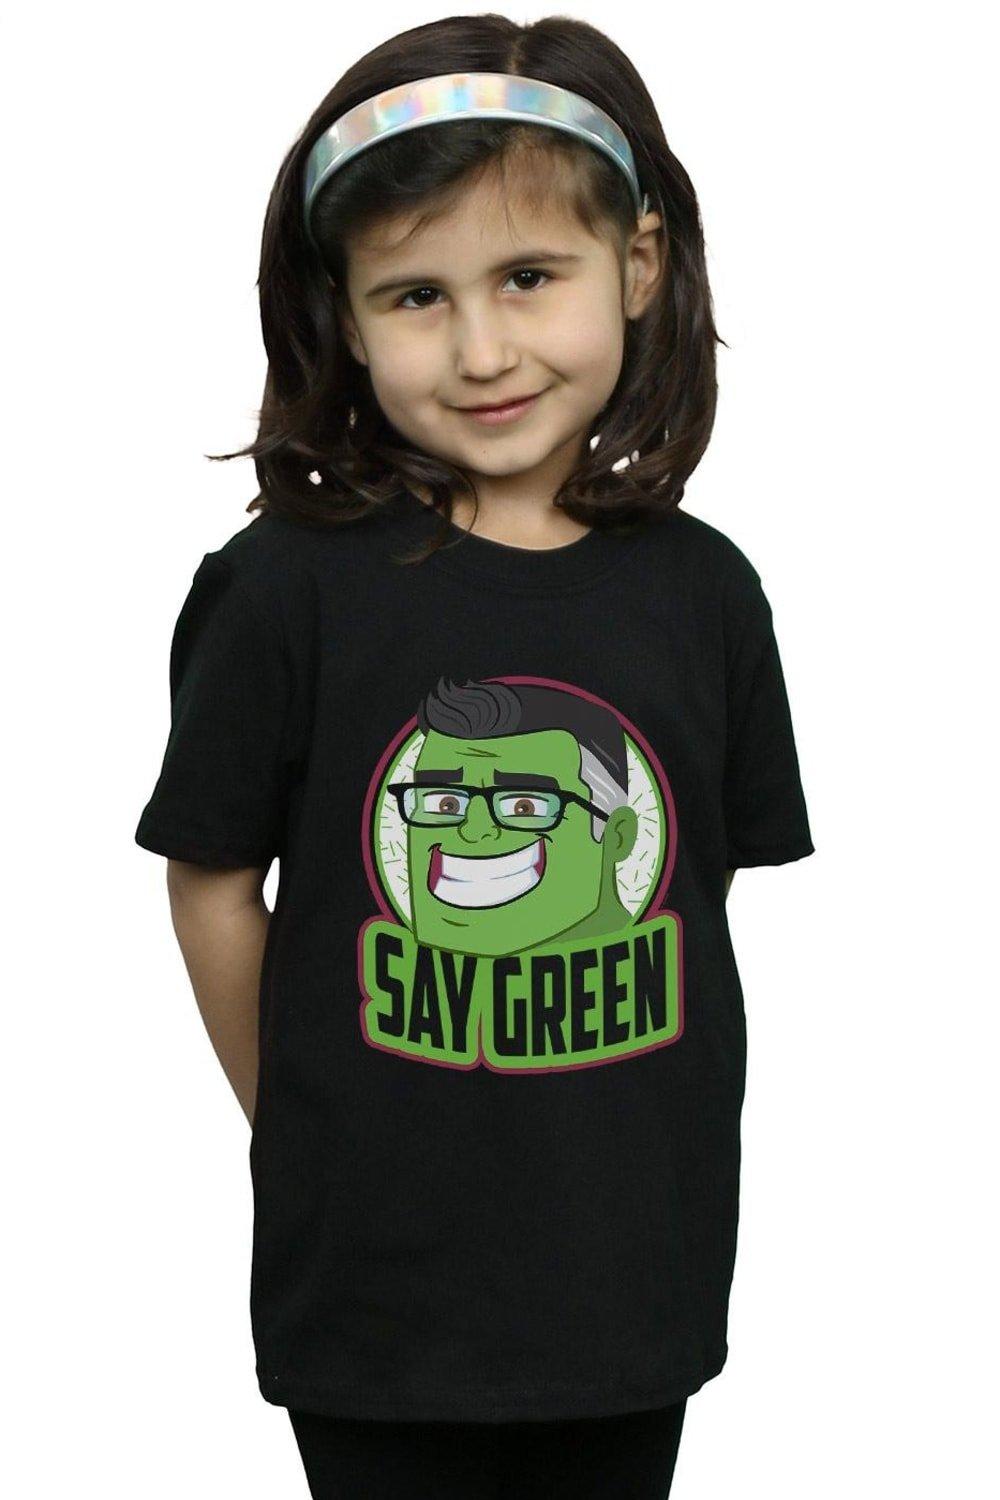 Avengers Endgame Hulk Say Green Cotton T-Shirt